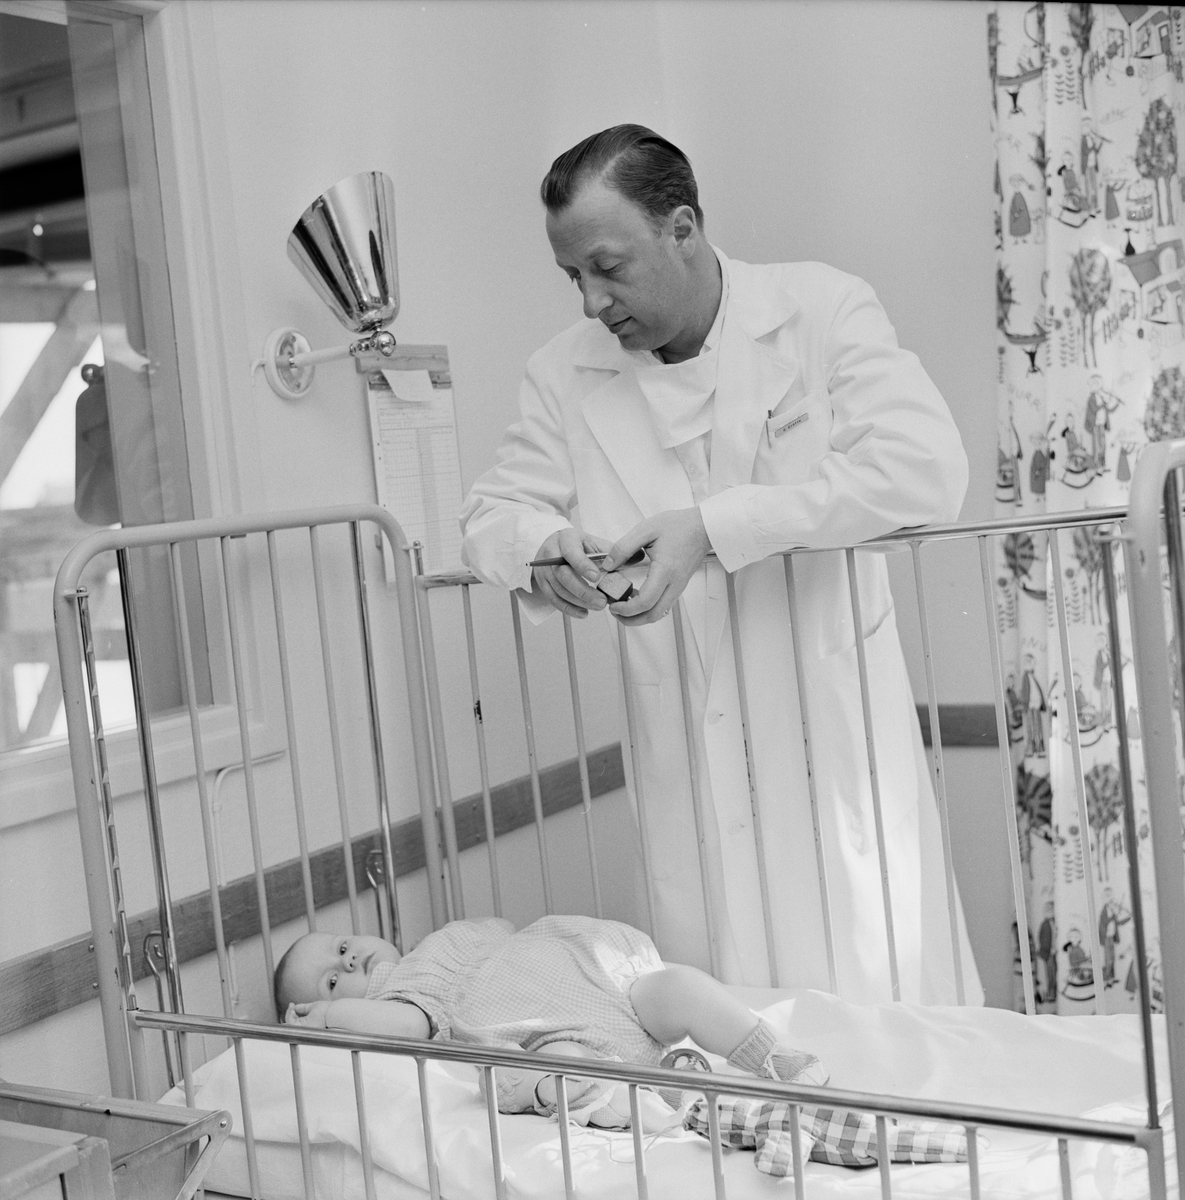 Akademiska sjukhuset, docent Grothe, spädbarn, Uppsala, februari 1962